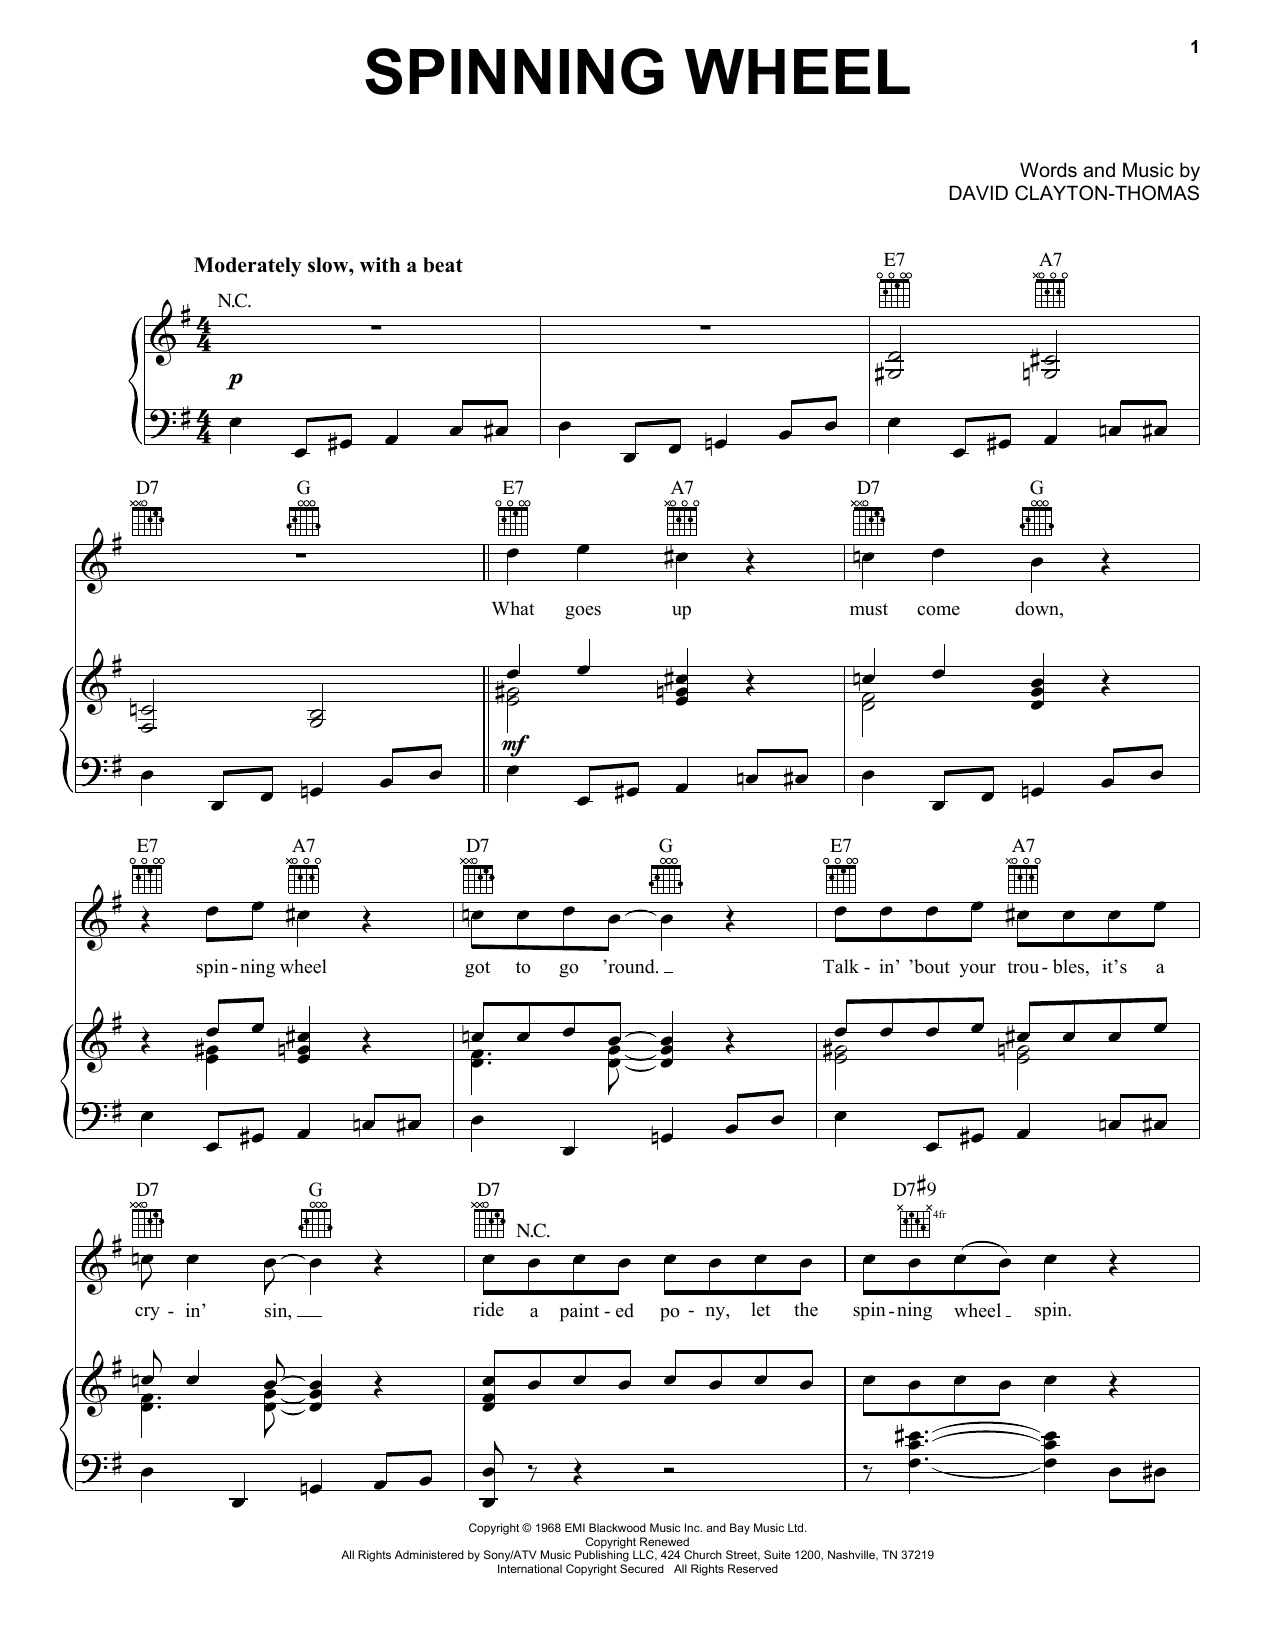 Blood, Sweat & Tears Spinning Wheel Sheet Music Notes & Chords for Viola - Download or Print PDF